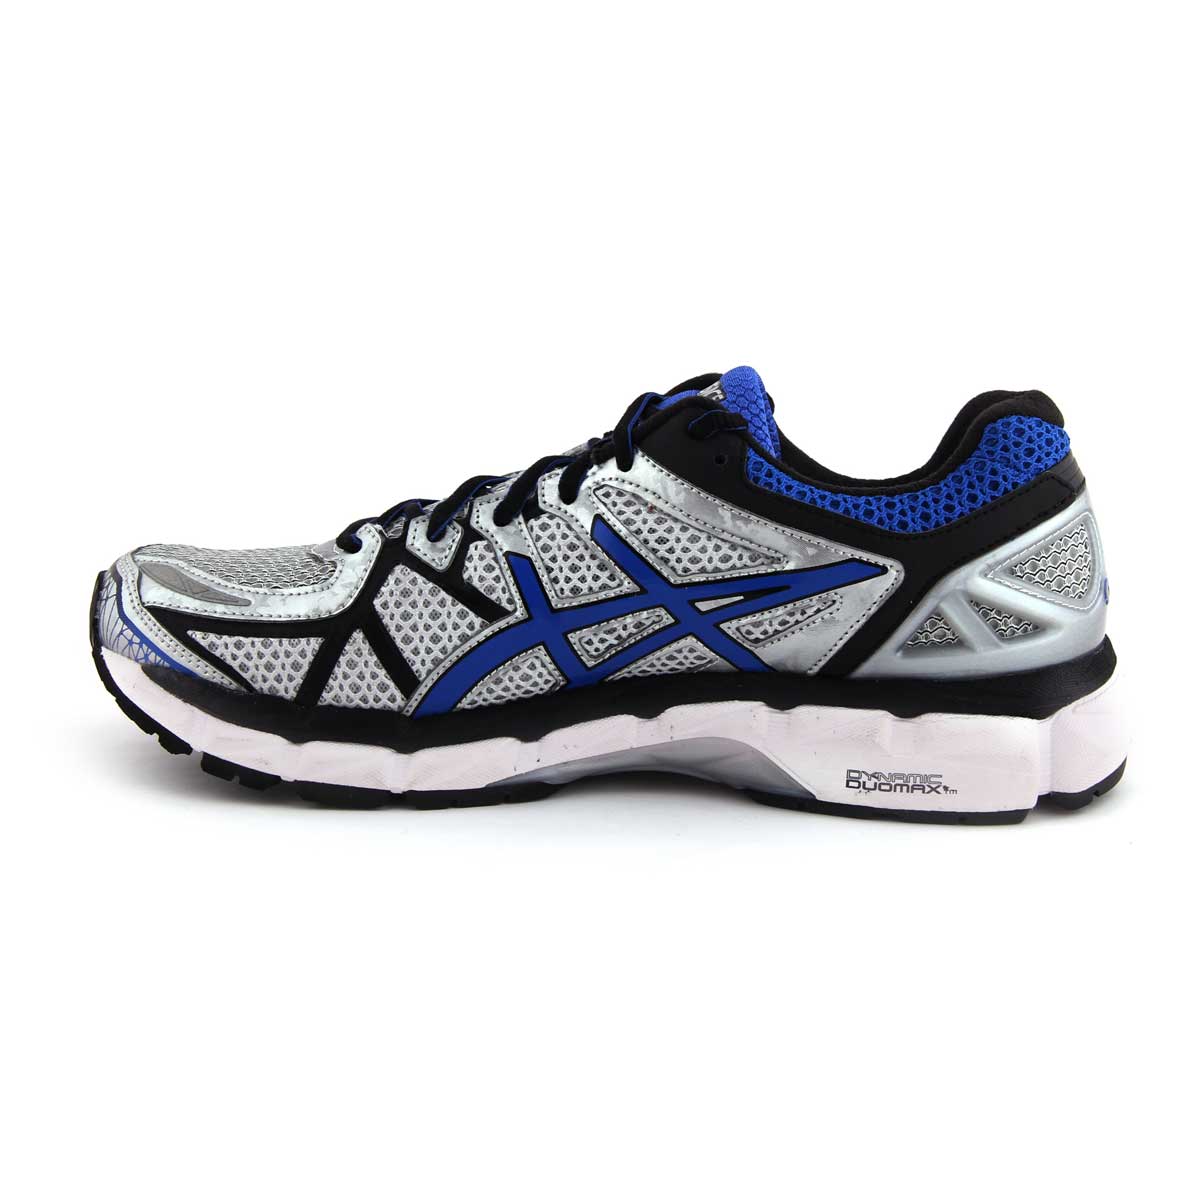 Buy Asics Gel-Kayano 21 Men's Running Shoes (Lightning/Royal) Online